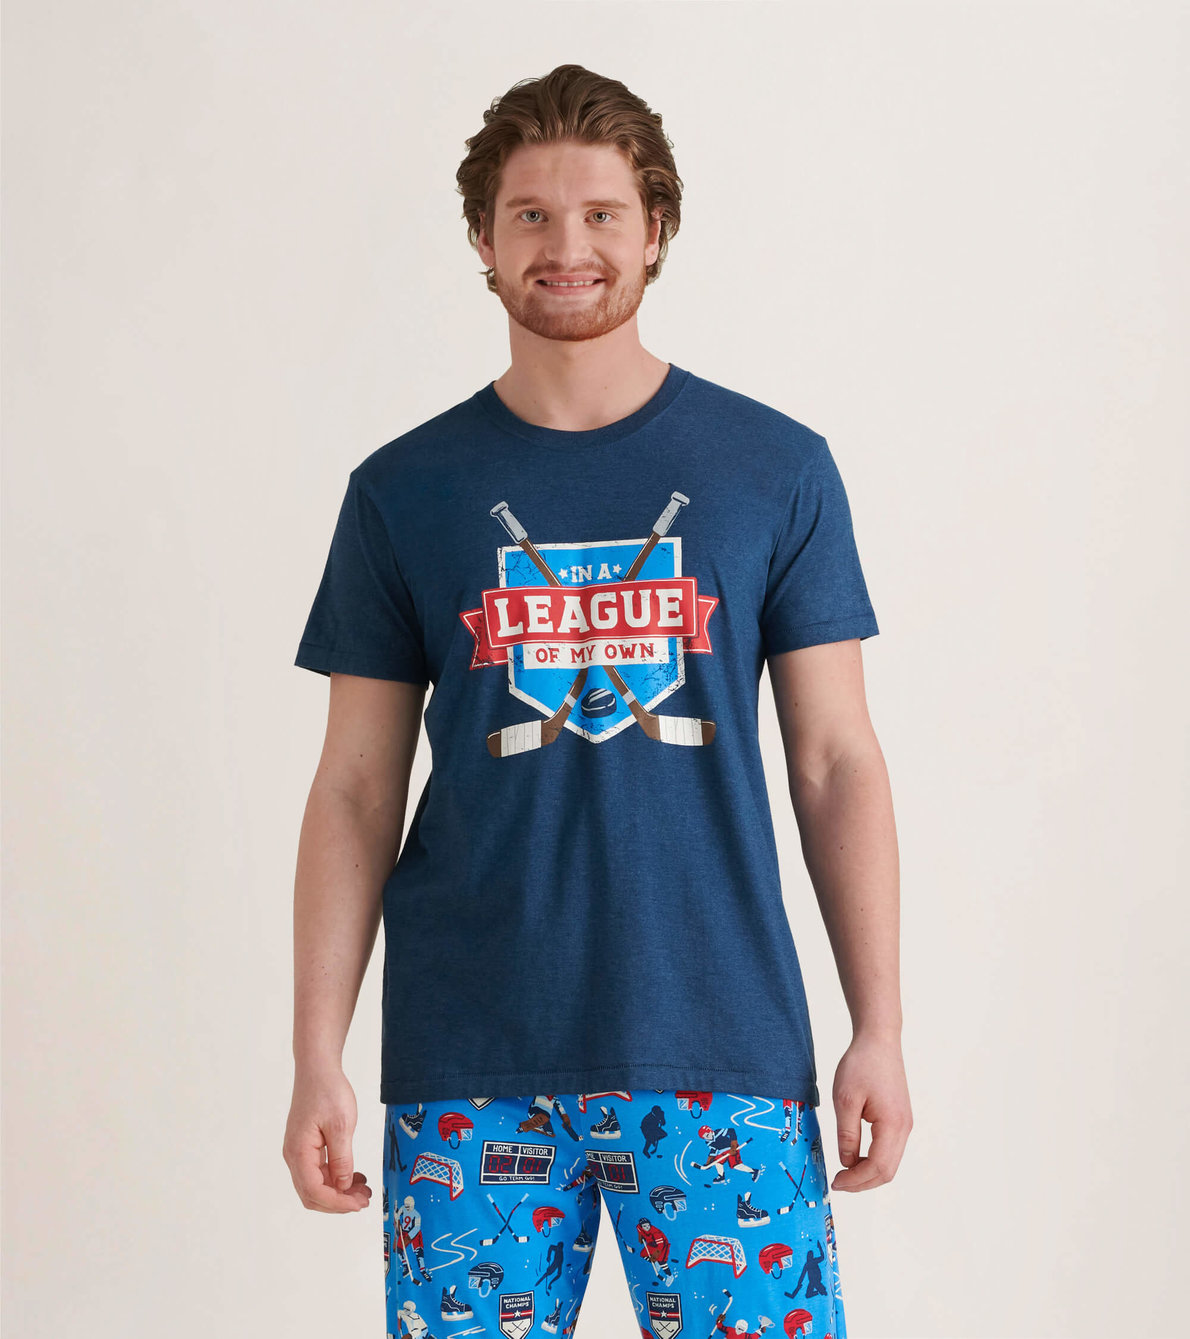 View larger image of Men's Hockey League T-Shirt